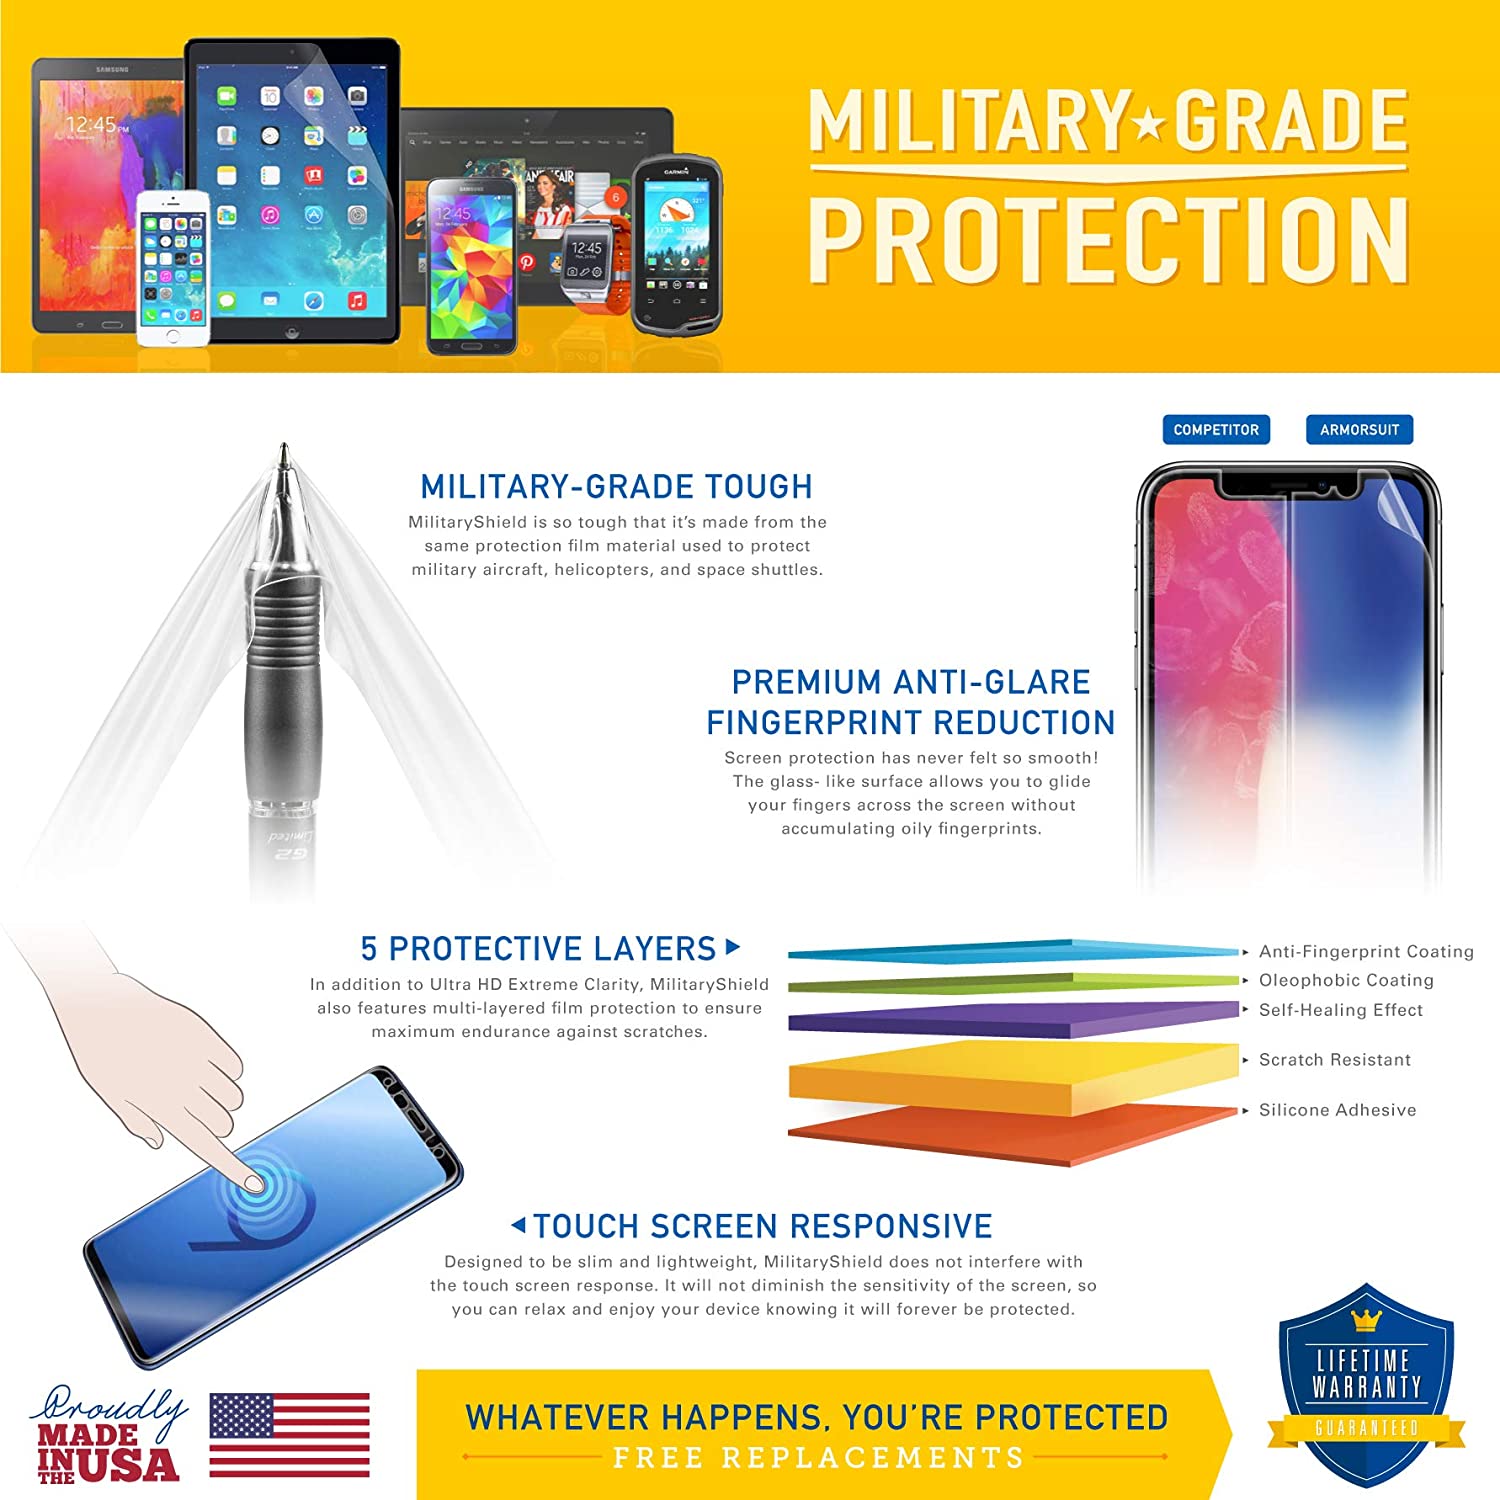 [2-Pack] Samsung Galaxy Amp Prime / Galaxy J3 (2016) Matte Screen Protector